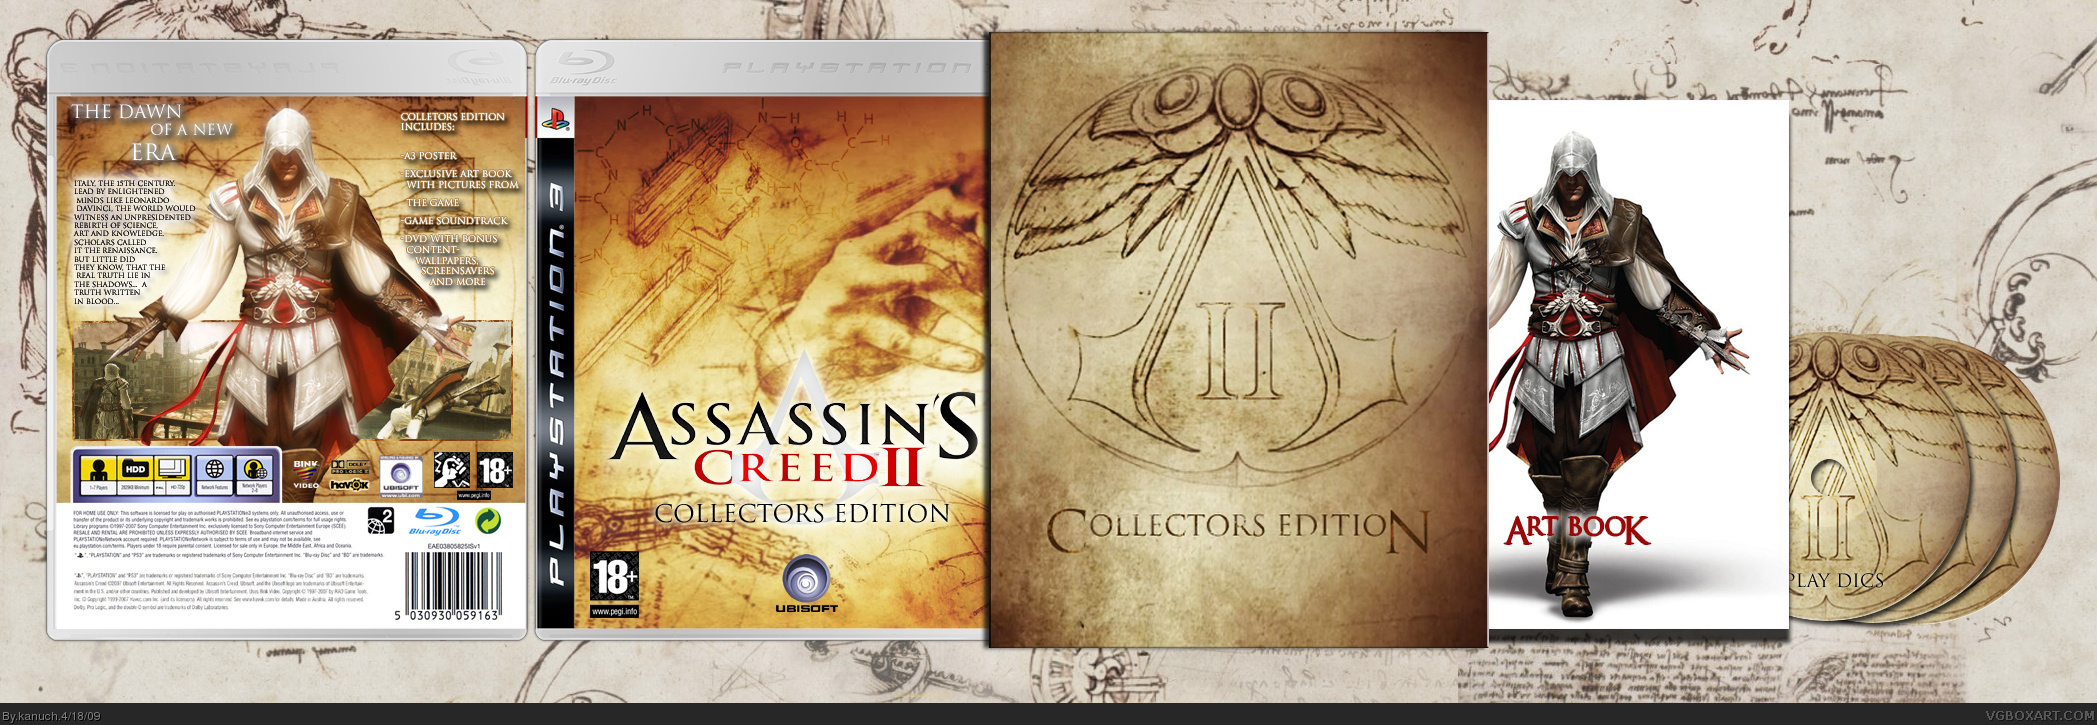 Assassin's Creed 2: Collectors Edition box cover